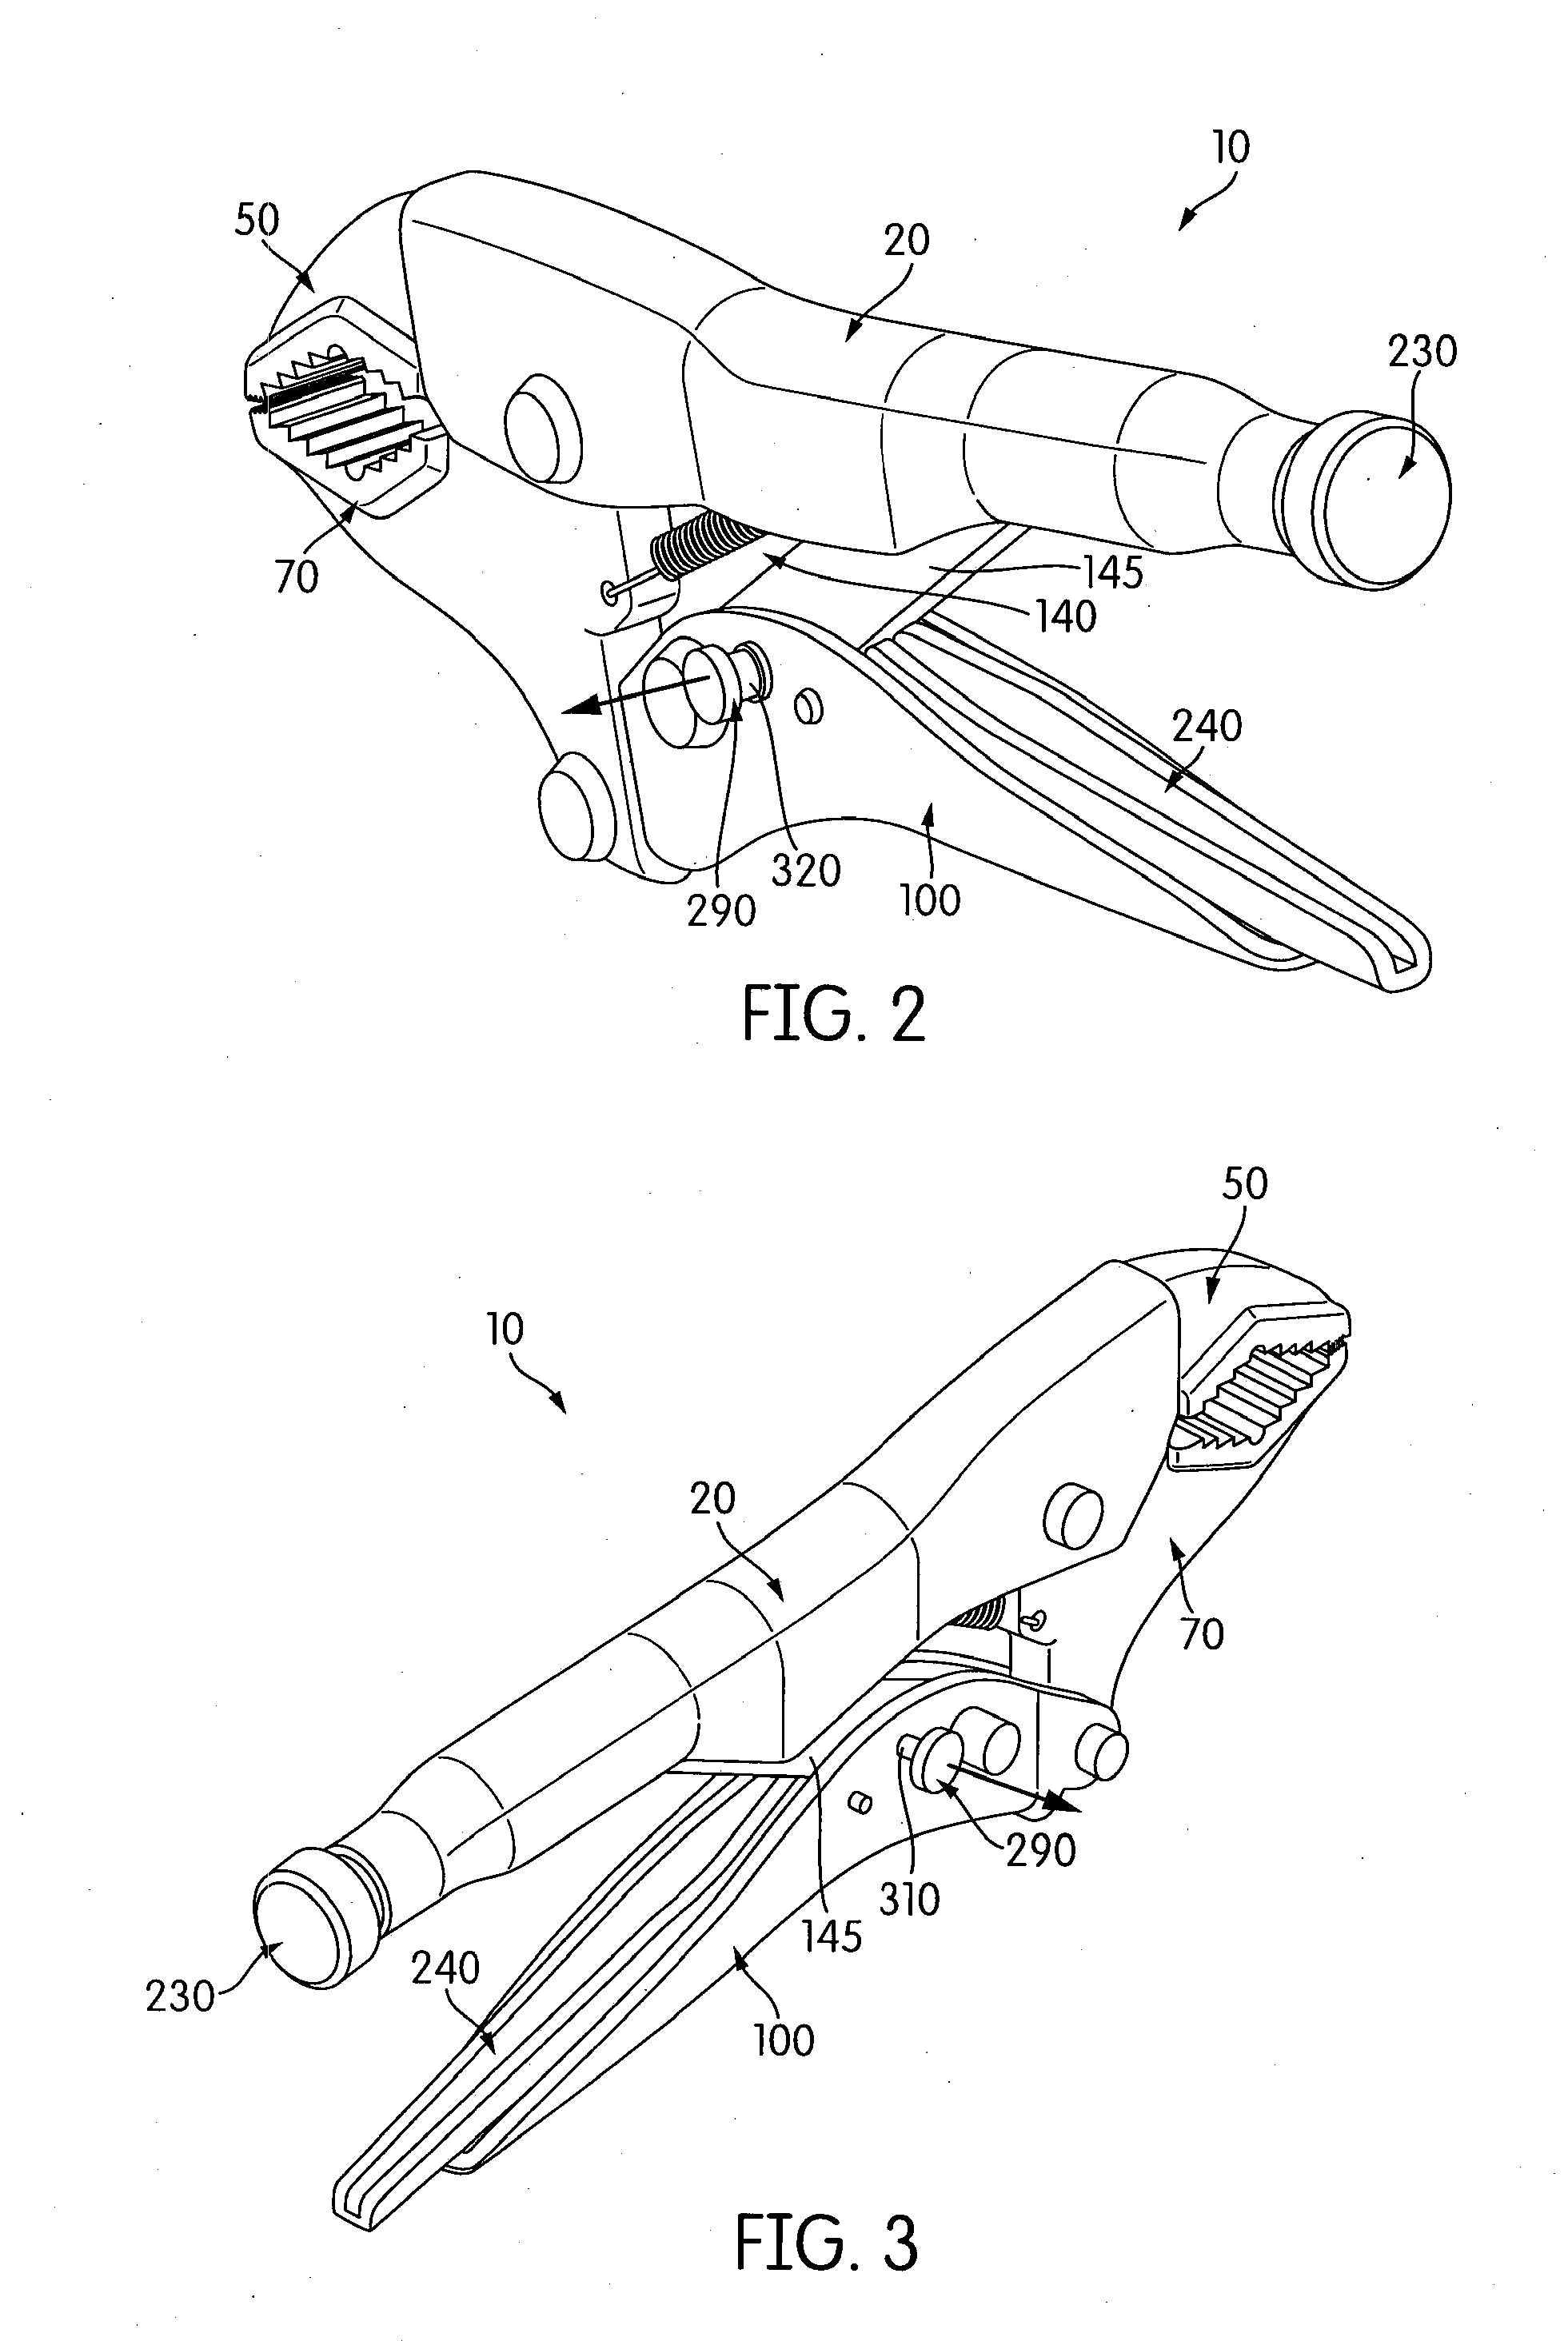 Locking pliers with handle locking mechanism